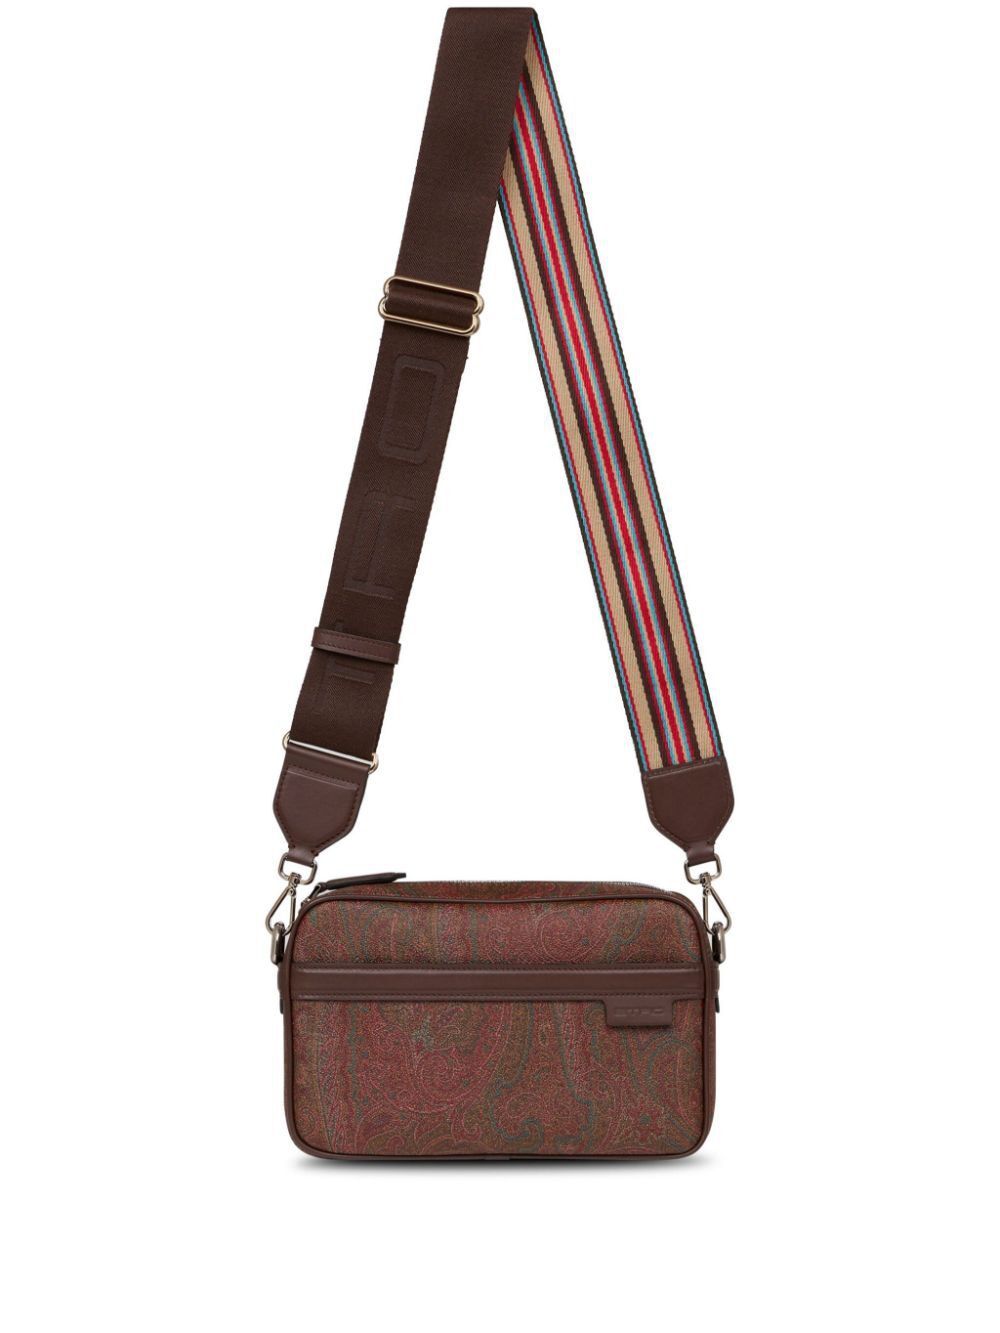 ETRO SMALL PAISLEYPRINT LEATHER CROSSBODY Handbag